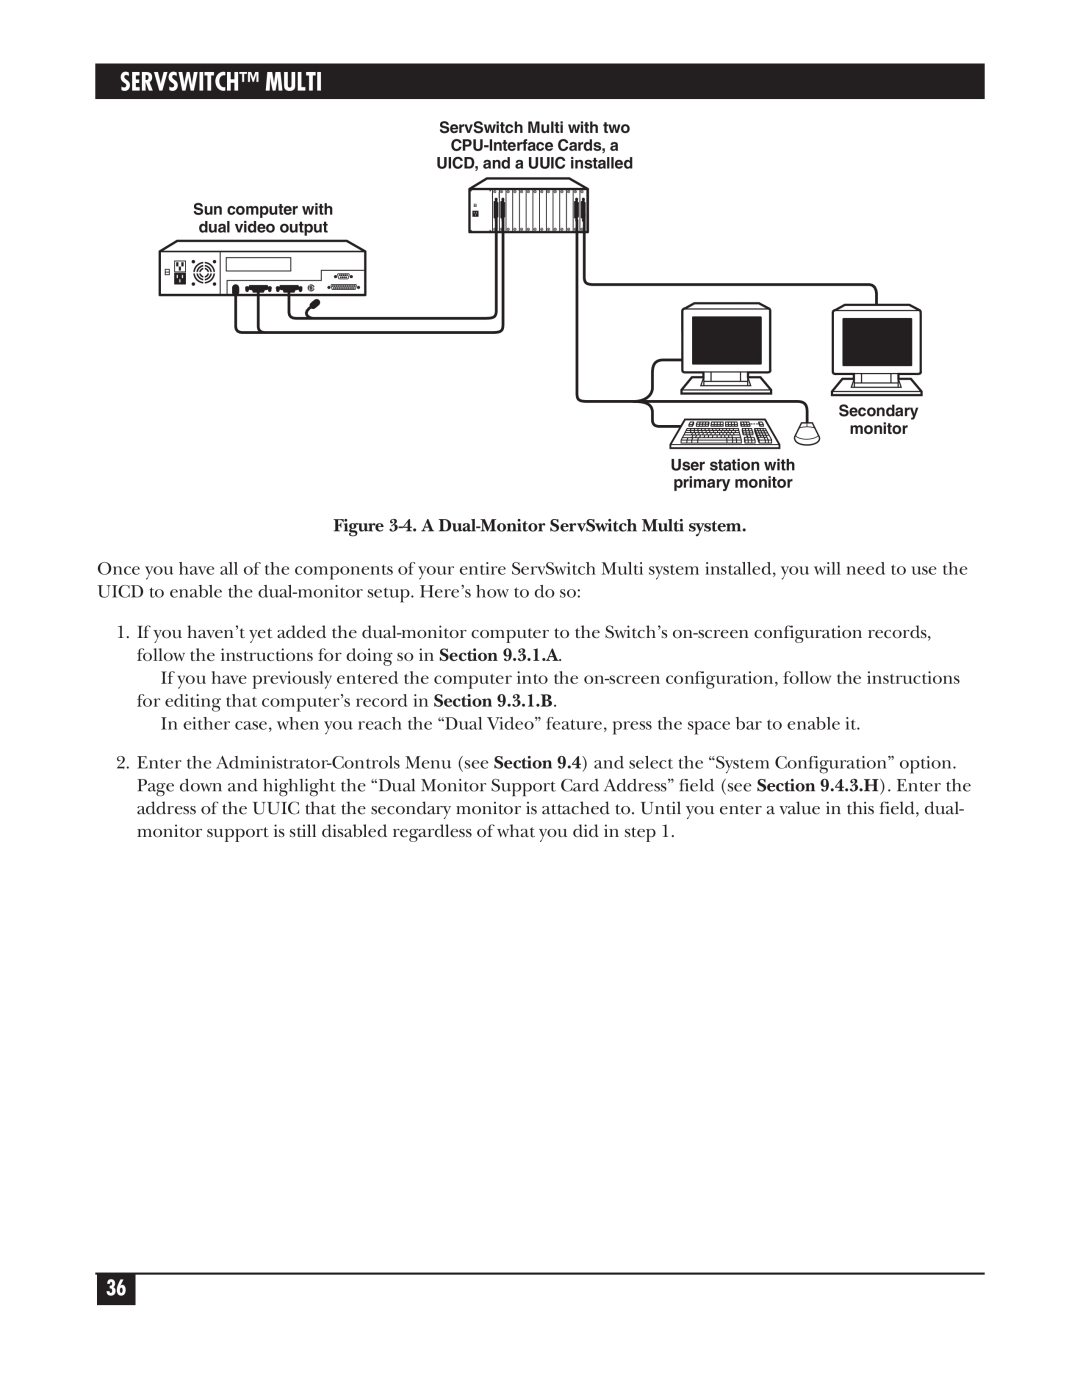 Black Box KV162A manual Servswitch Multi, 4. A Dual-Monitor ServSwitch Multi system 